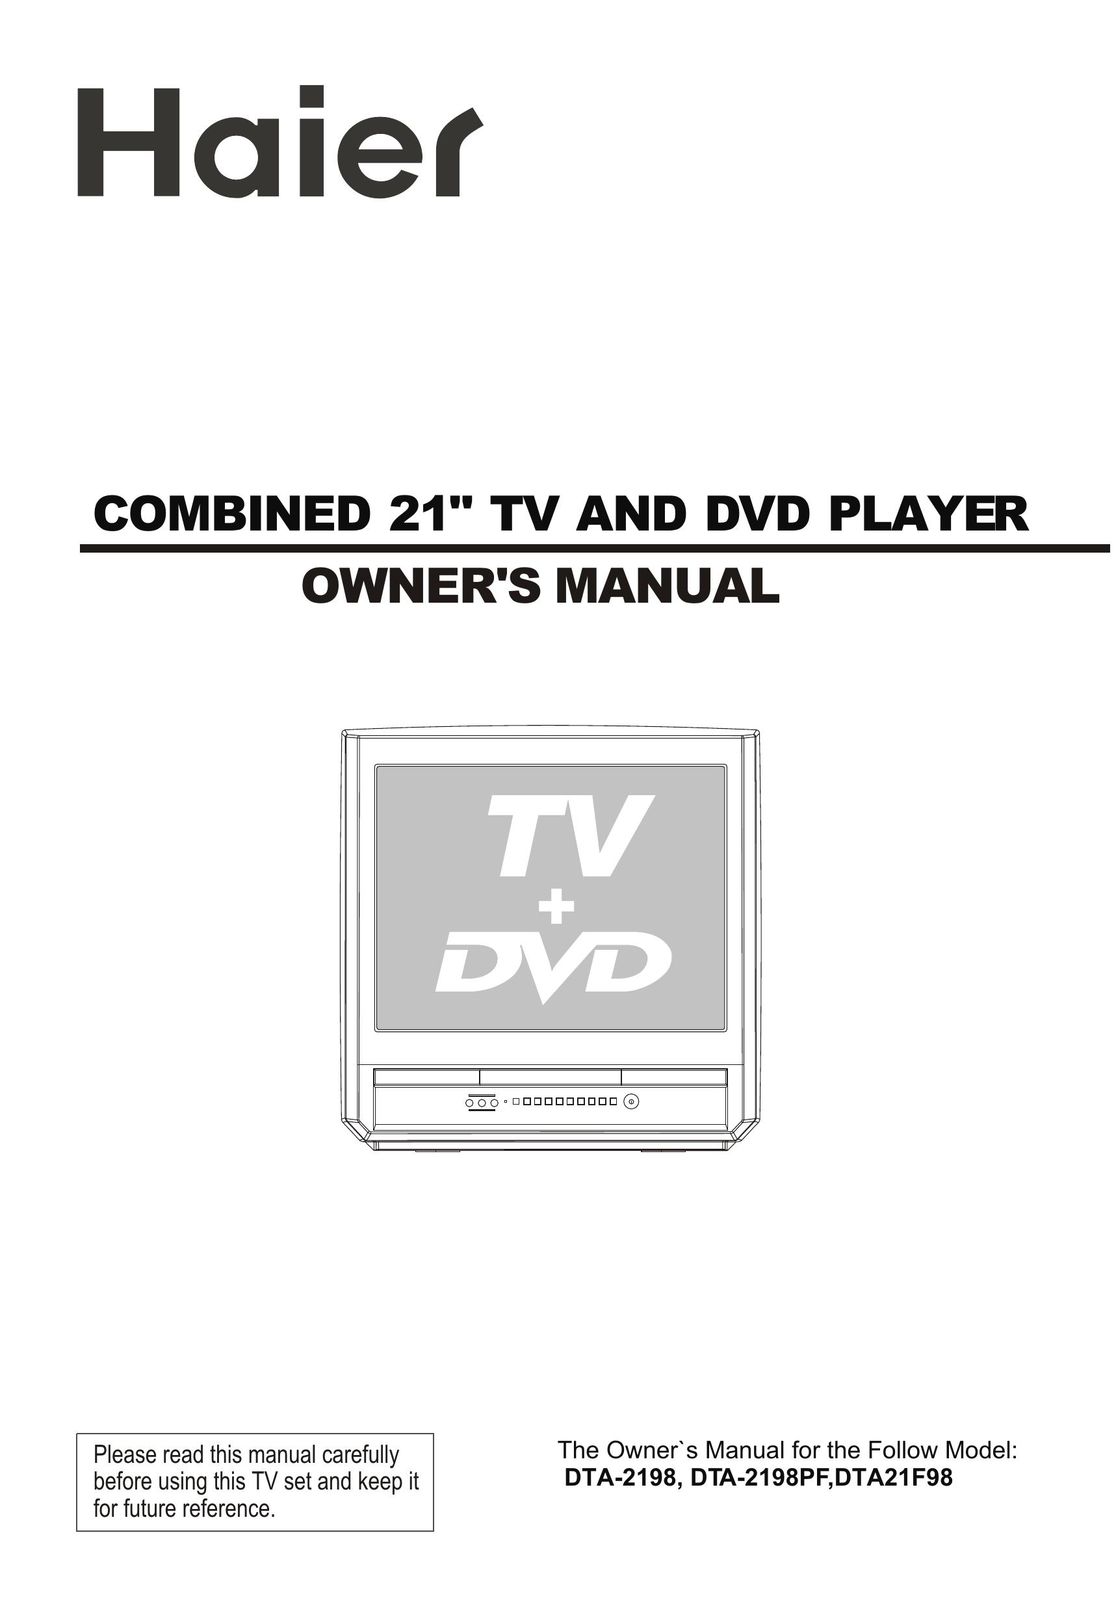 Haier DTA21F98 DVD Player User Manual